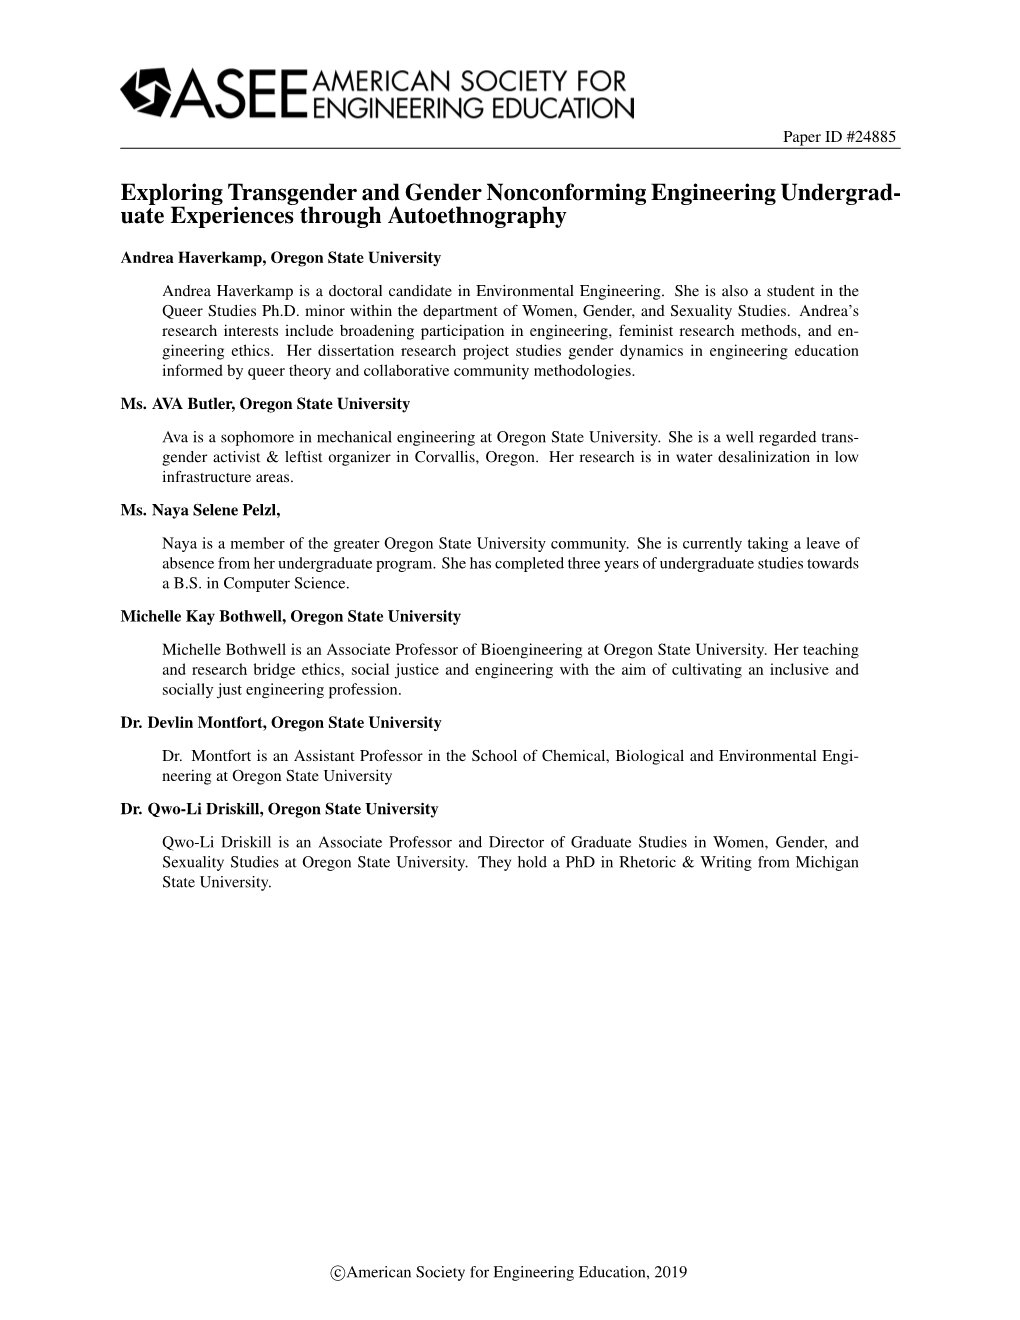 Exploring Transgender and Gender Nonconforming Engineering Undergrad- Uate Experiences Through Autoethnography